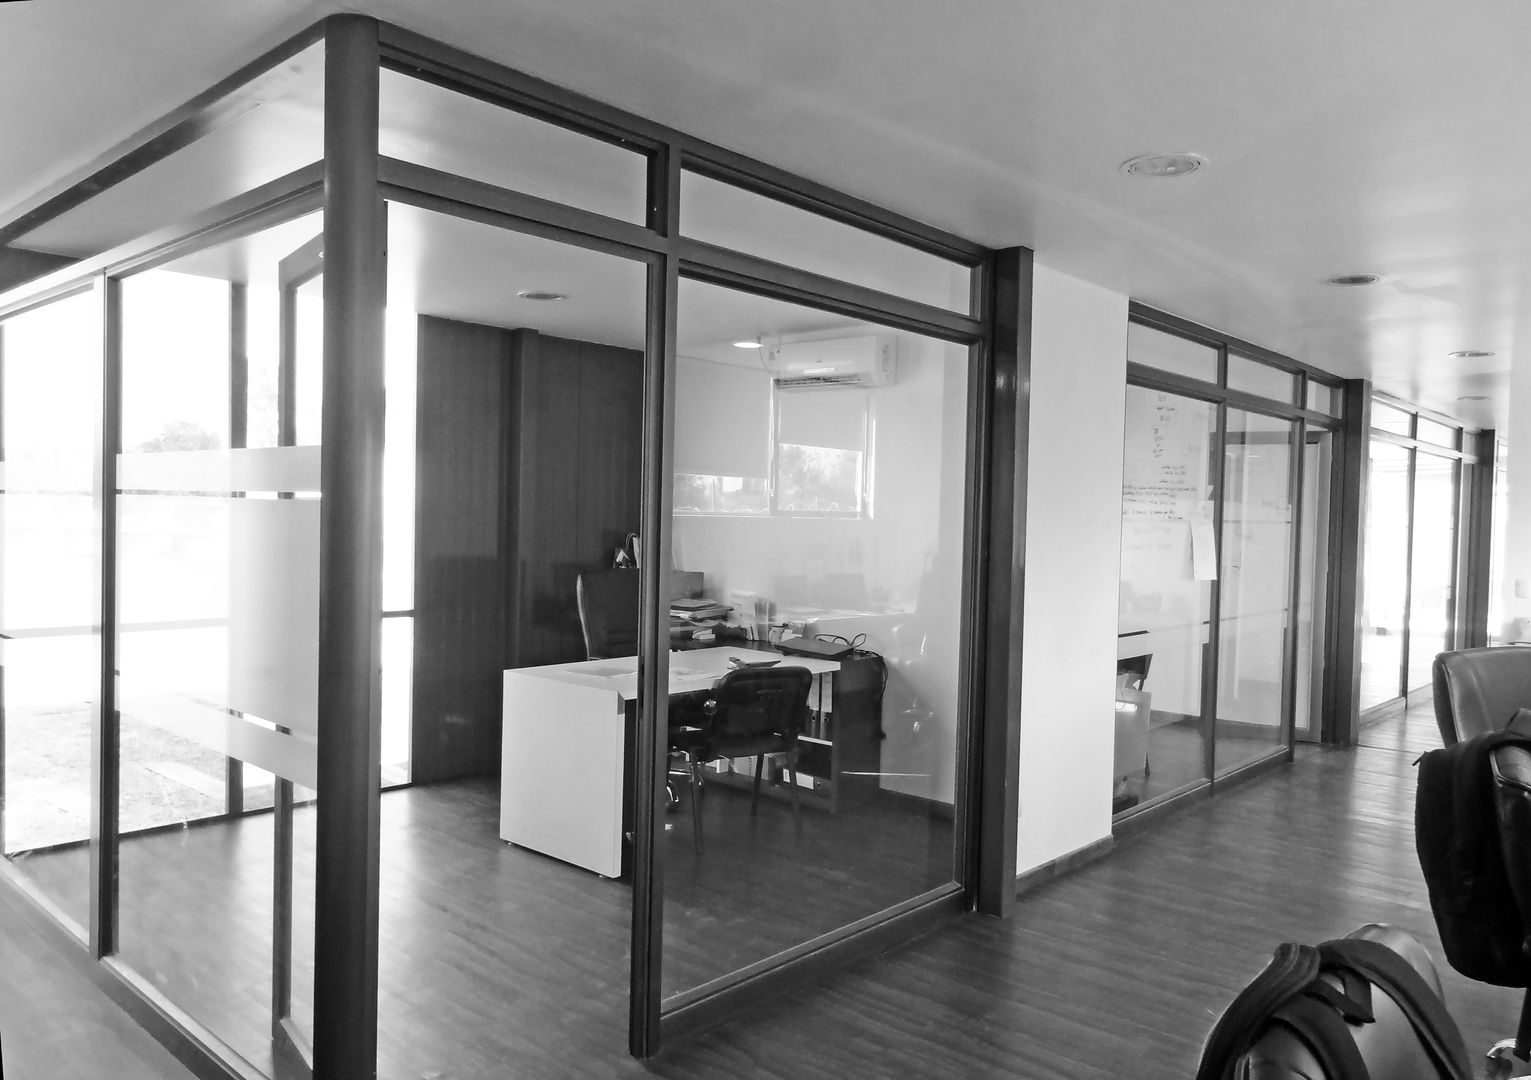 Oficinas Modulares Transportables, m2 estudio arquitectos - Santiago m2 estudio arquitectos - Santiago غرفة الميديا